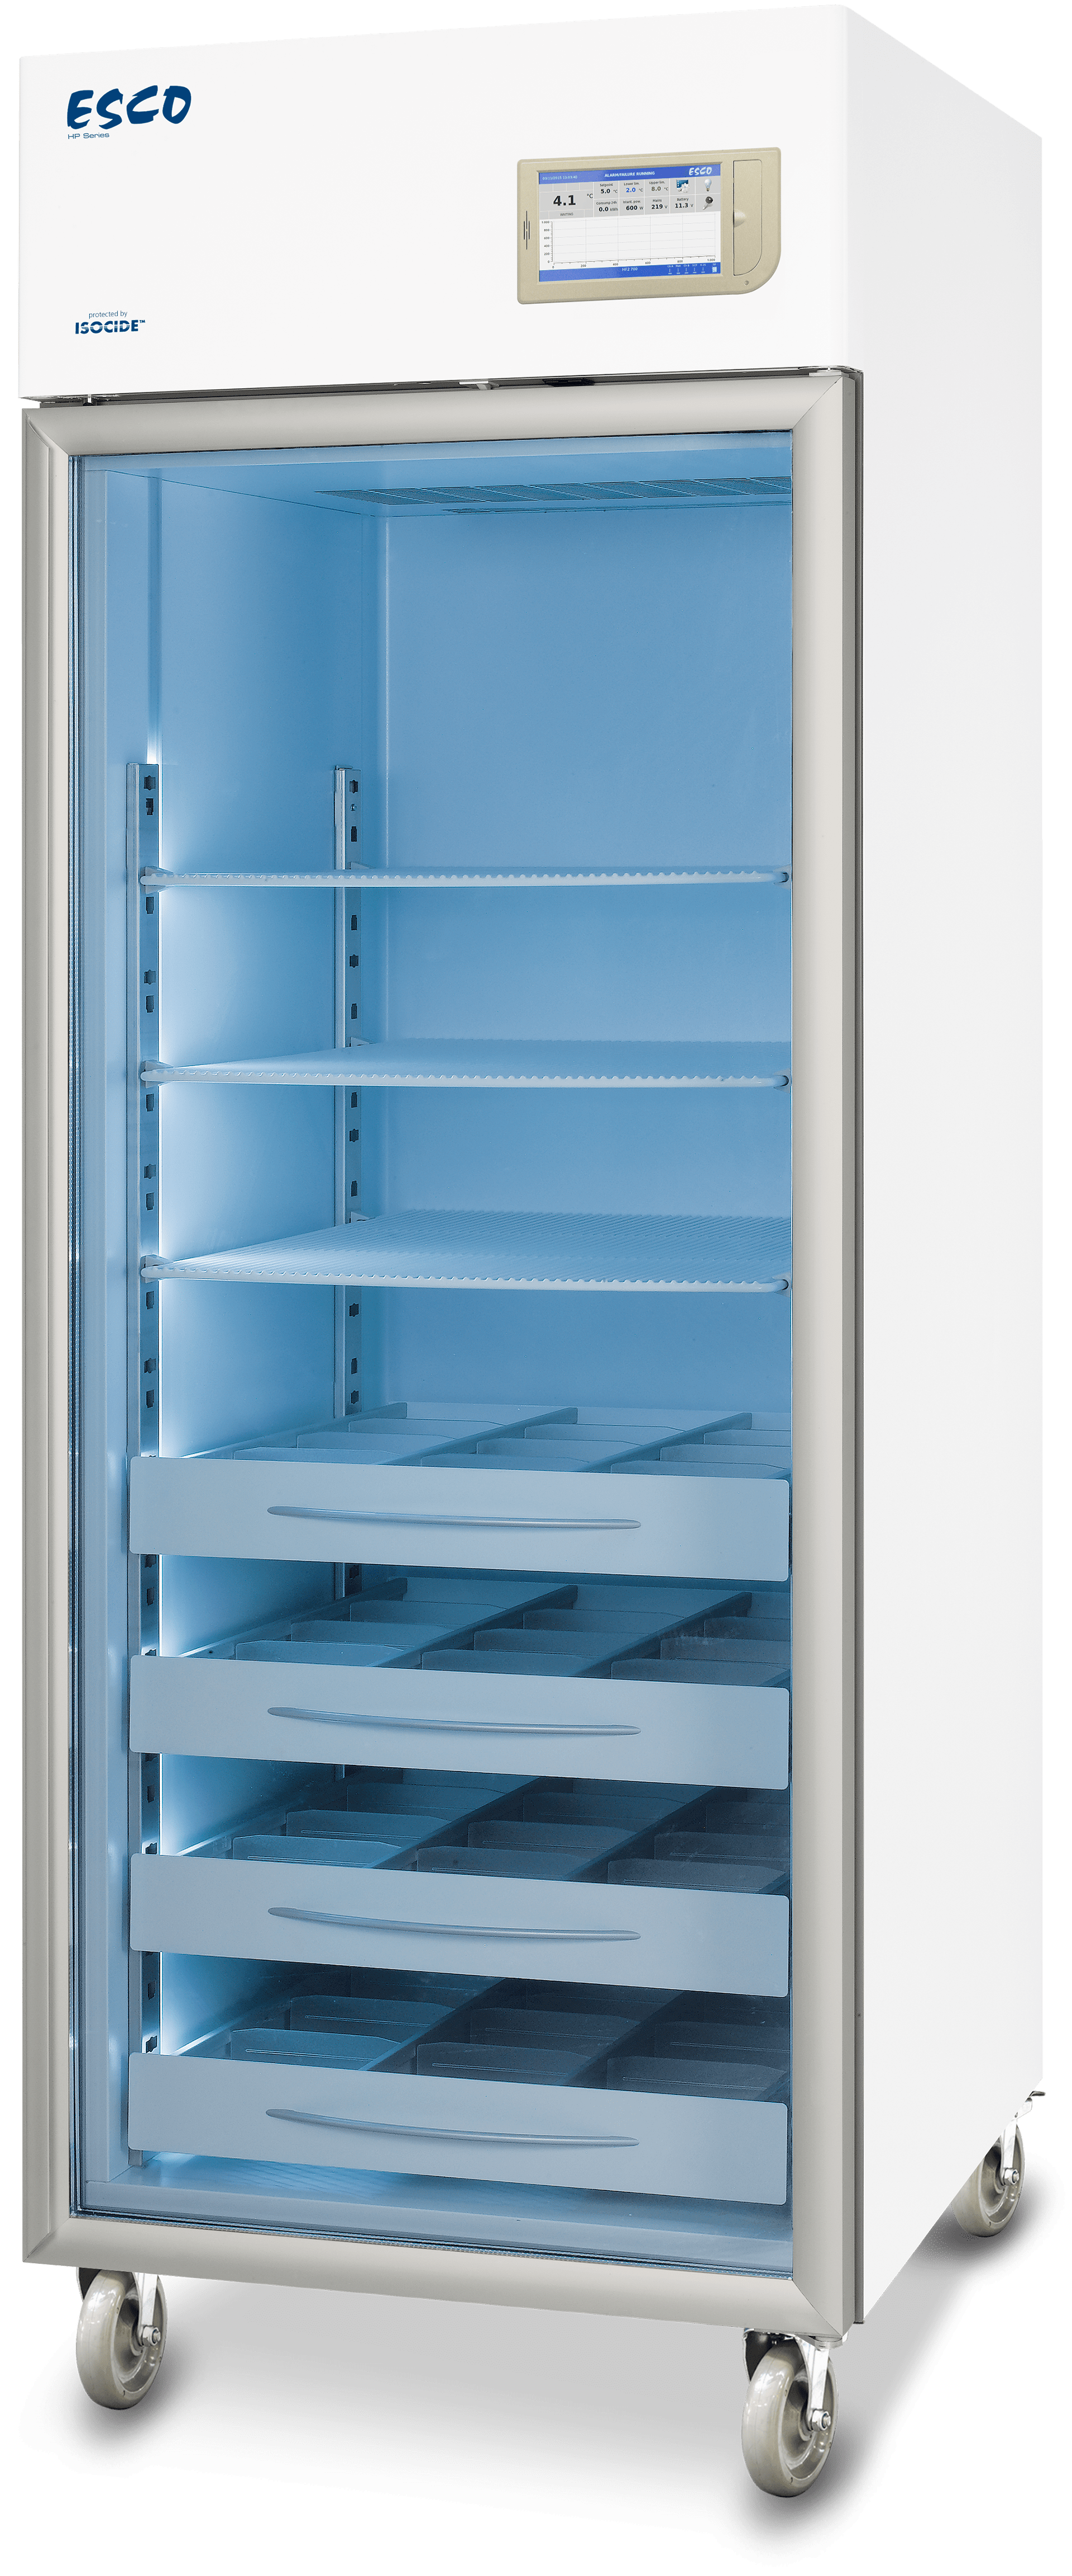 Escali NSF Refrigerator/Freezer Thermometer - Fante's Kitchen Shop